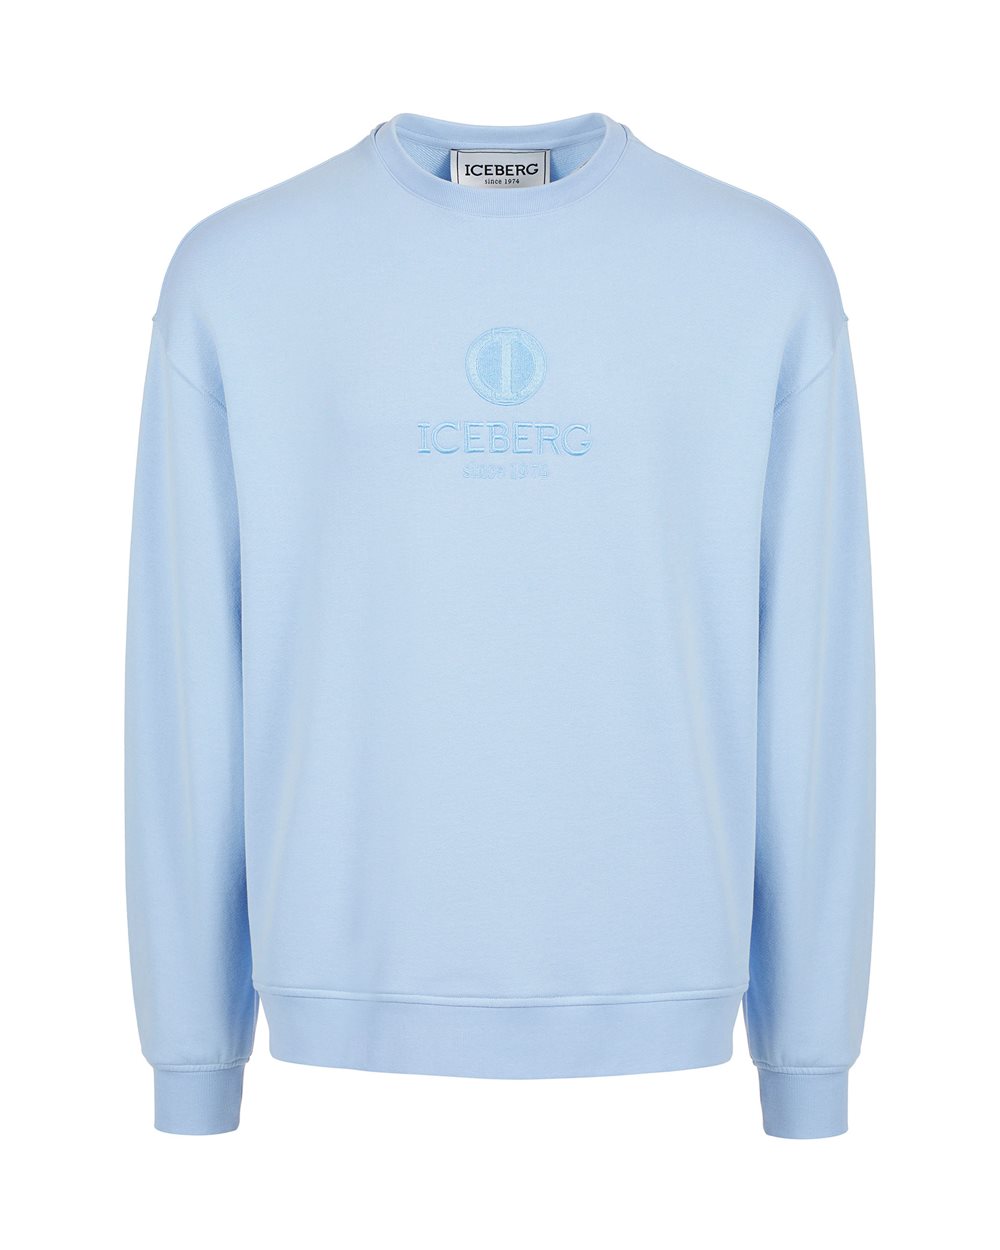 Sweatshirt with logo - New in | Iceberg - Official Website